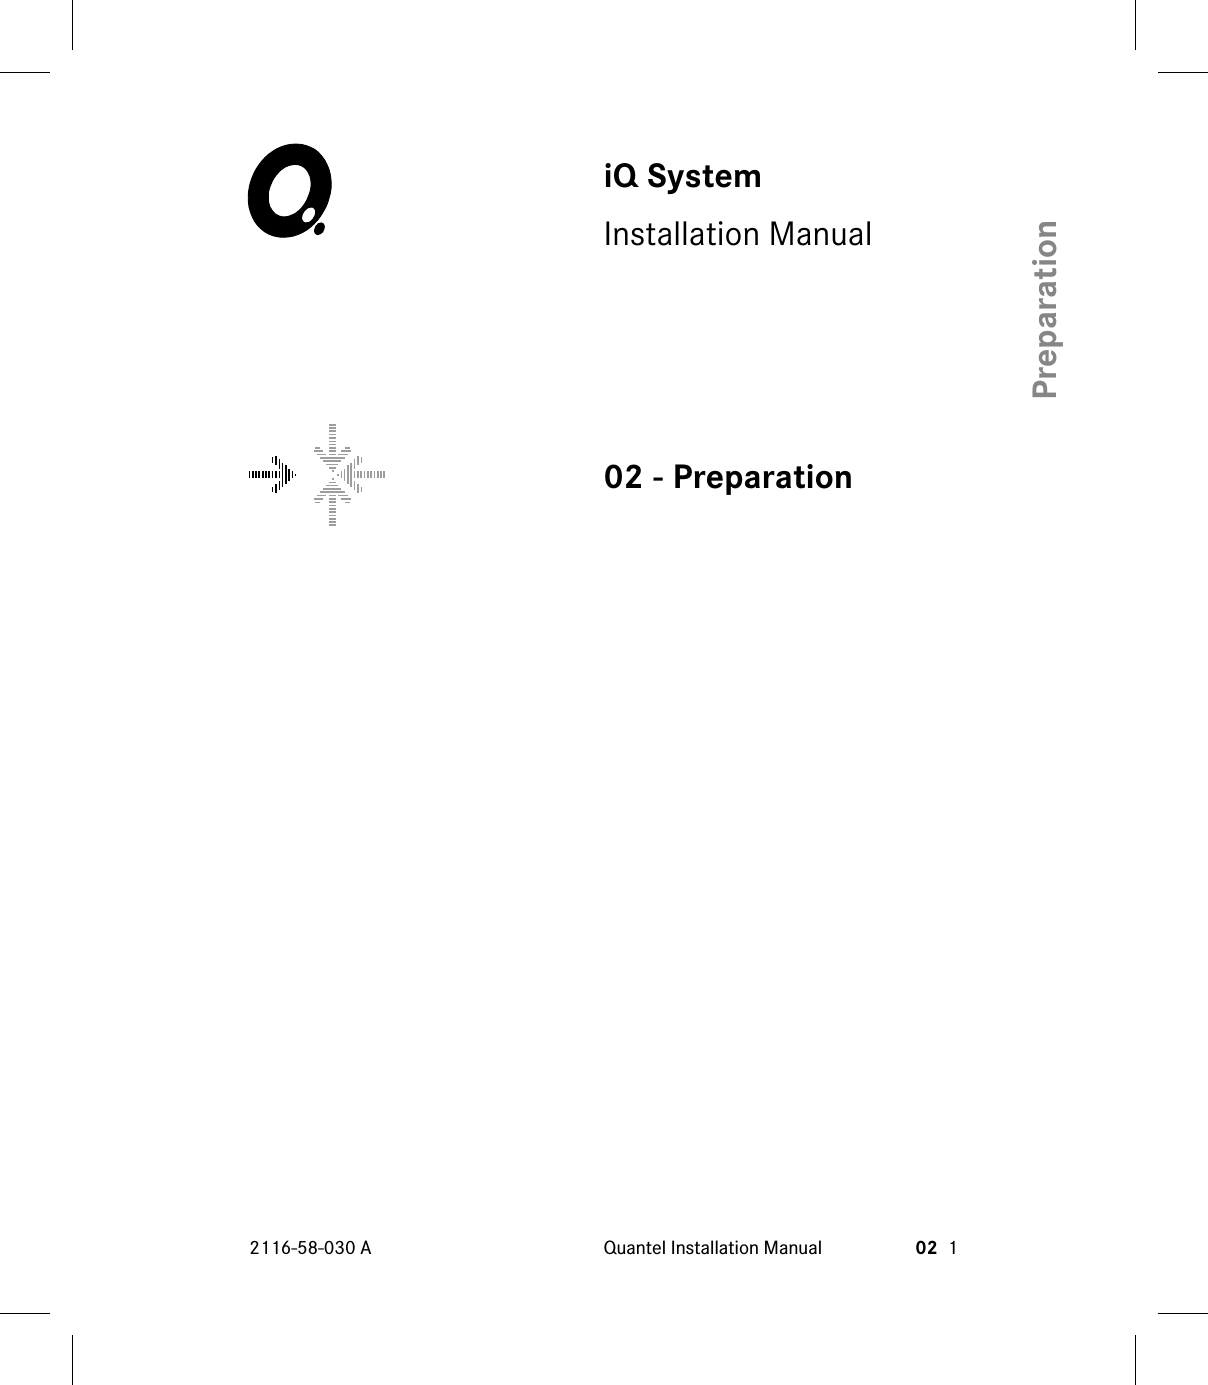 iQ SystemInstallation Manual02 - Preparation2116-58-030 A Quantel Installation Manual 02 1Preparation